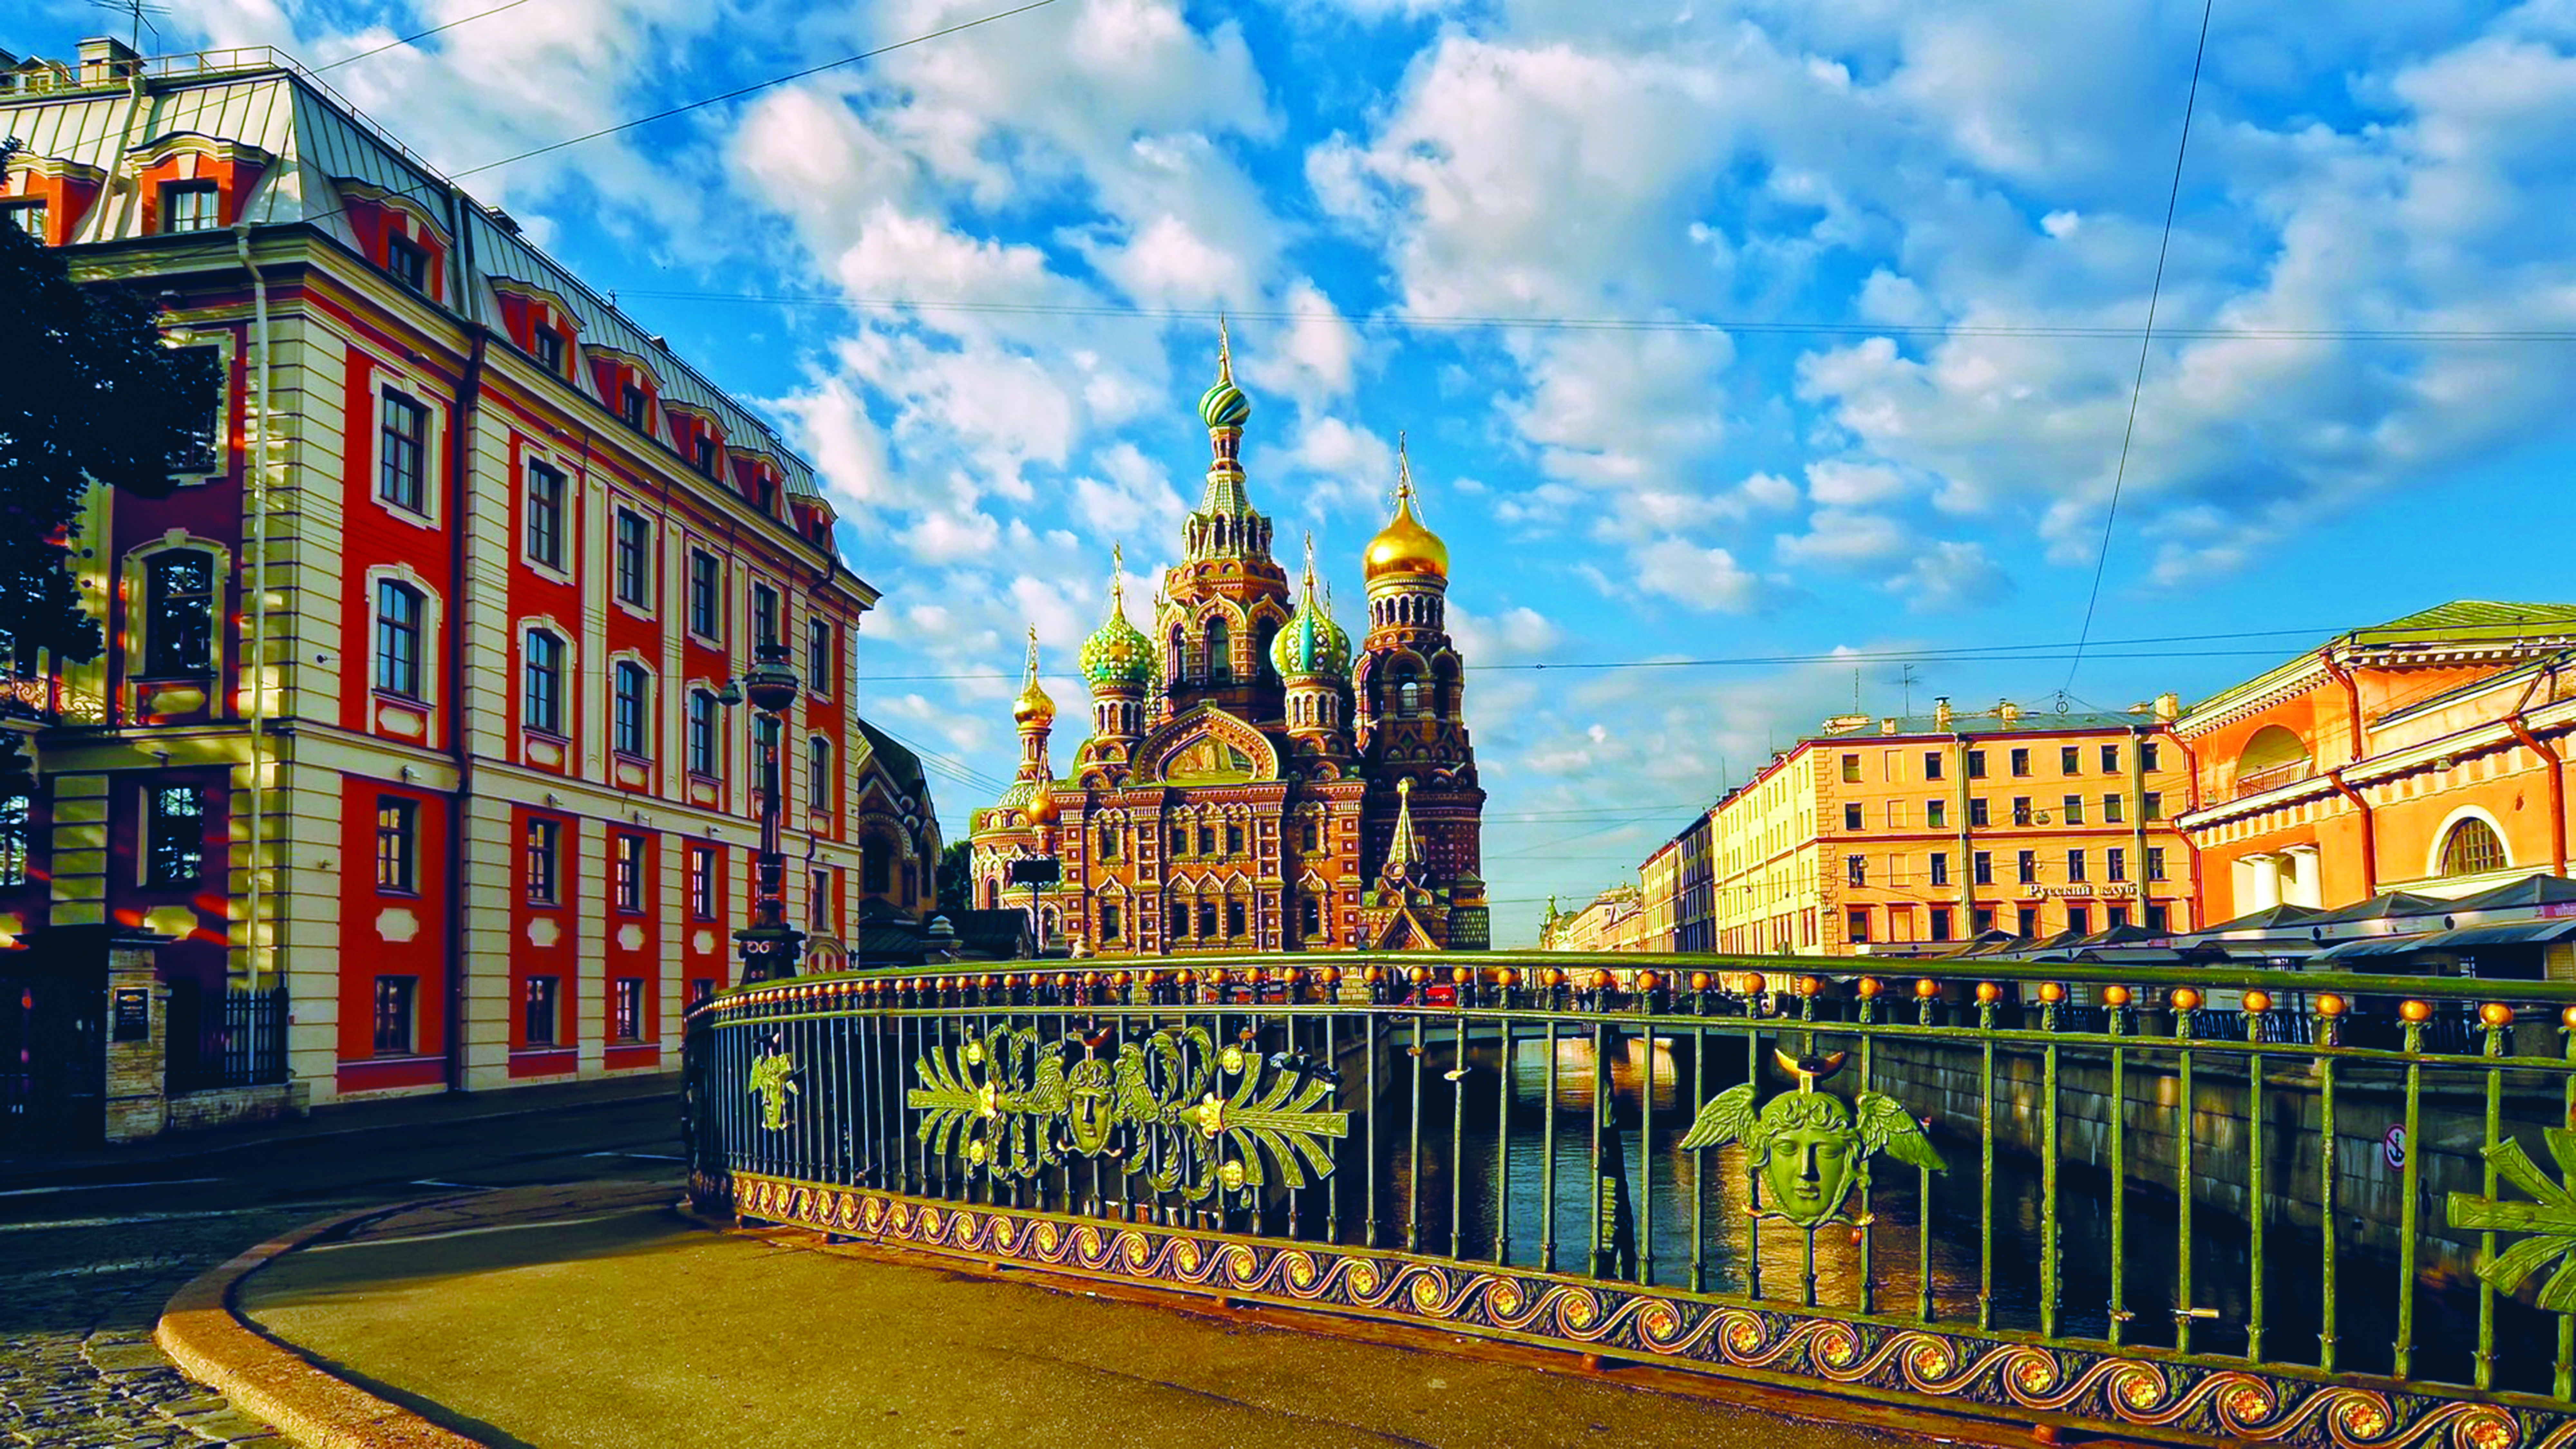 19 1080 Wallpaper Russia St Petersburg Church Bridge Building 俄羅斯音樂文化學習之旅